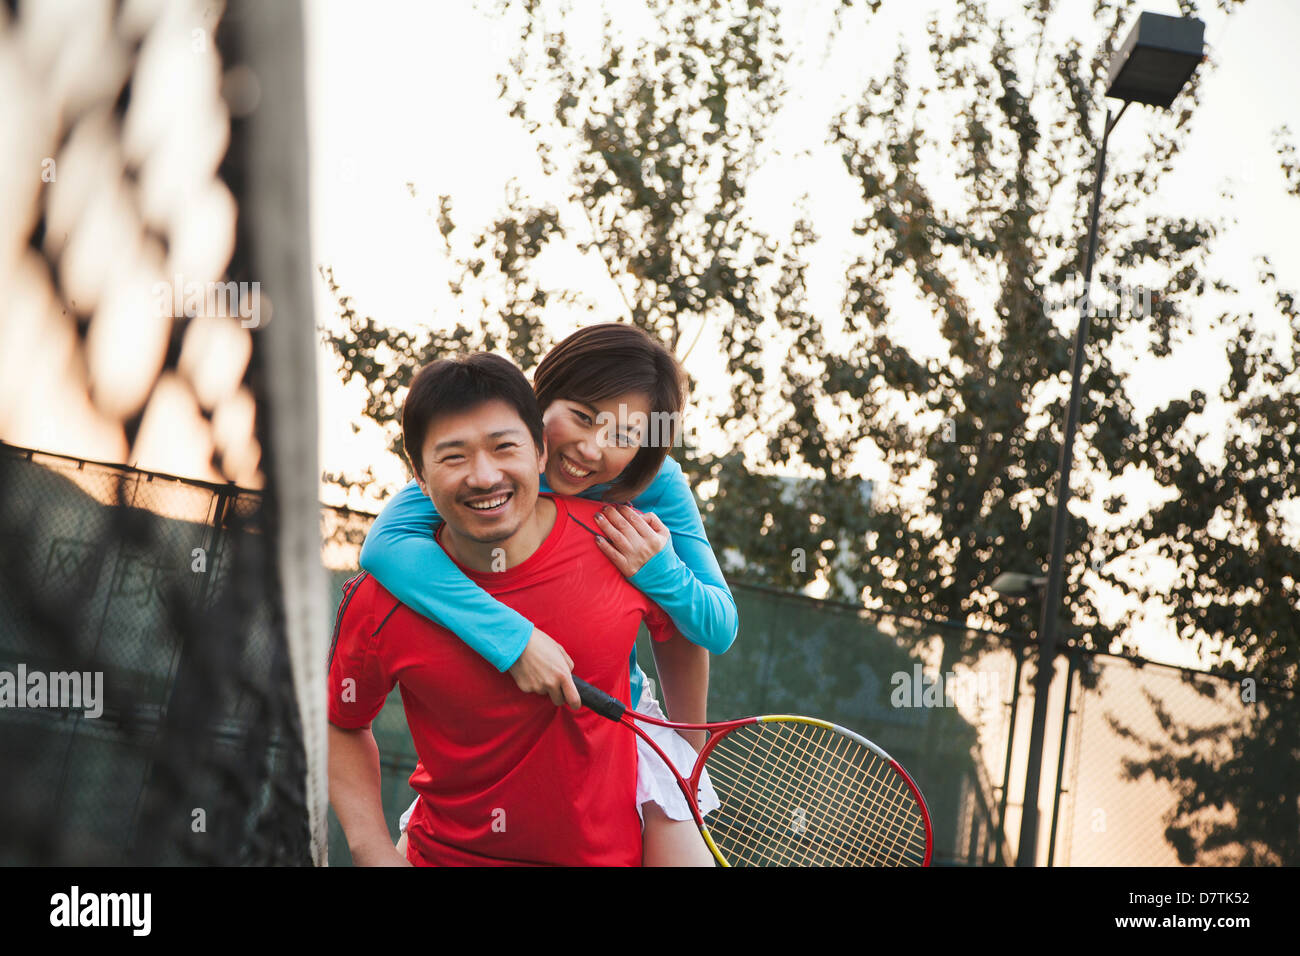 Boyfriend holding his girlfriend next to the tennis net Stock Photo